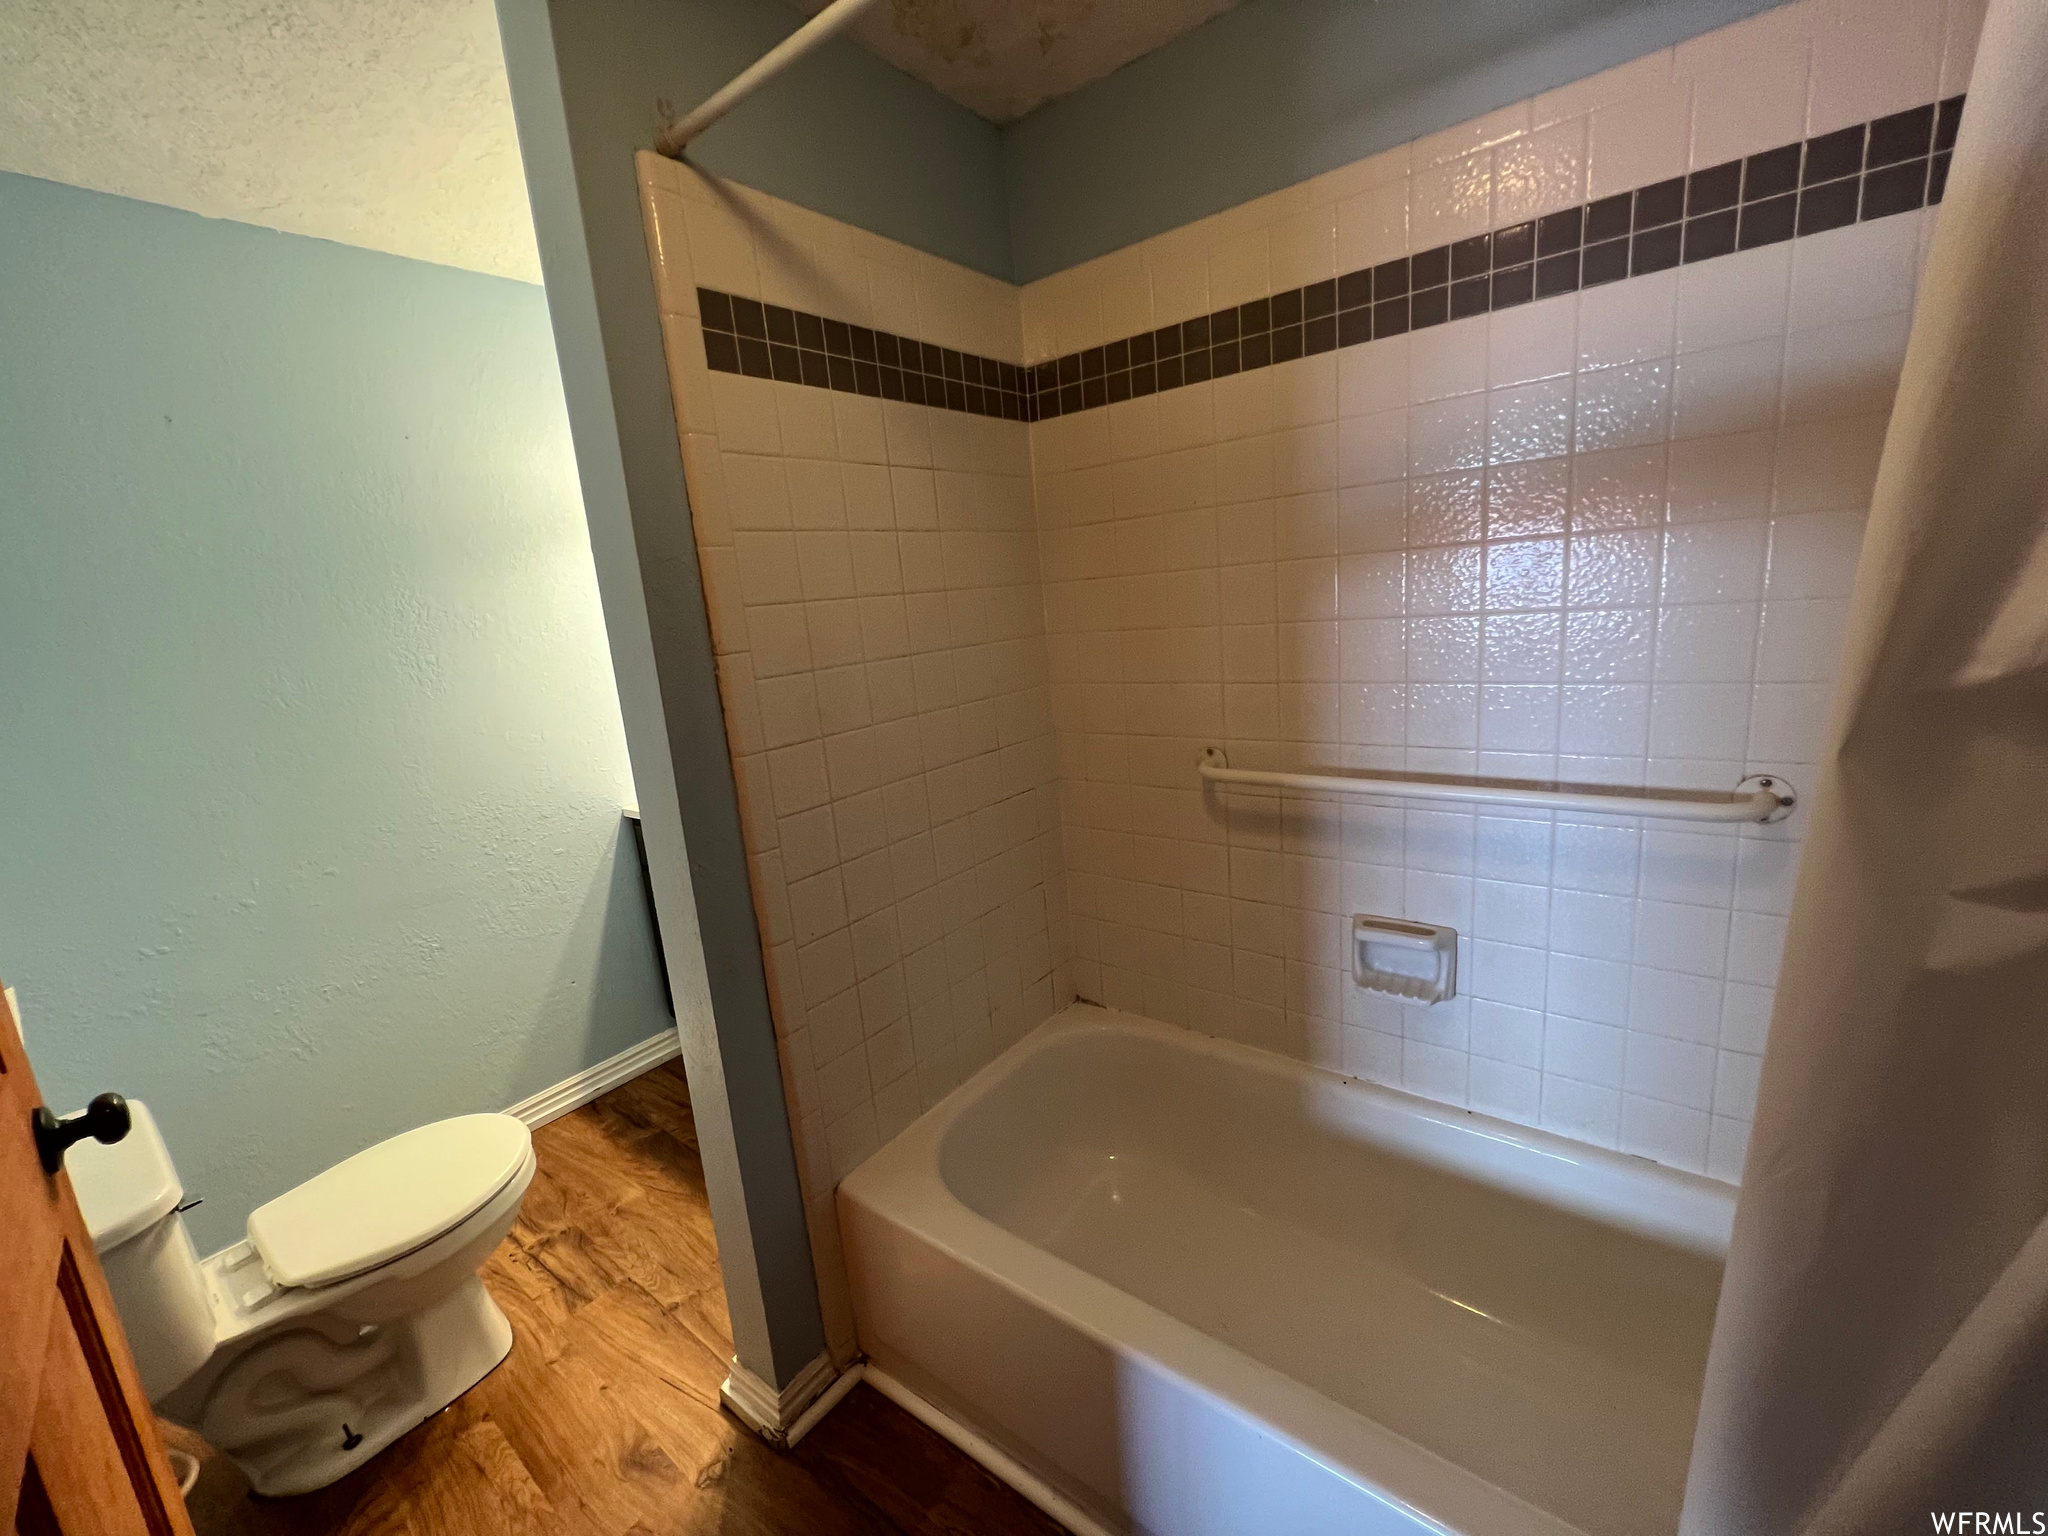 Bathroom with tiled shower / bath combo and light laminate floors